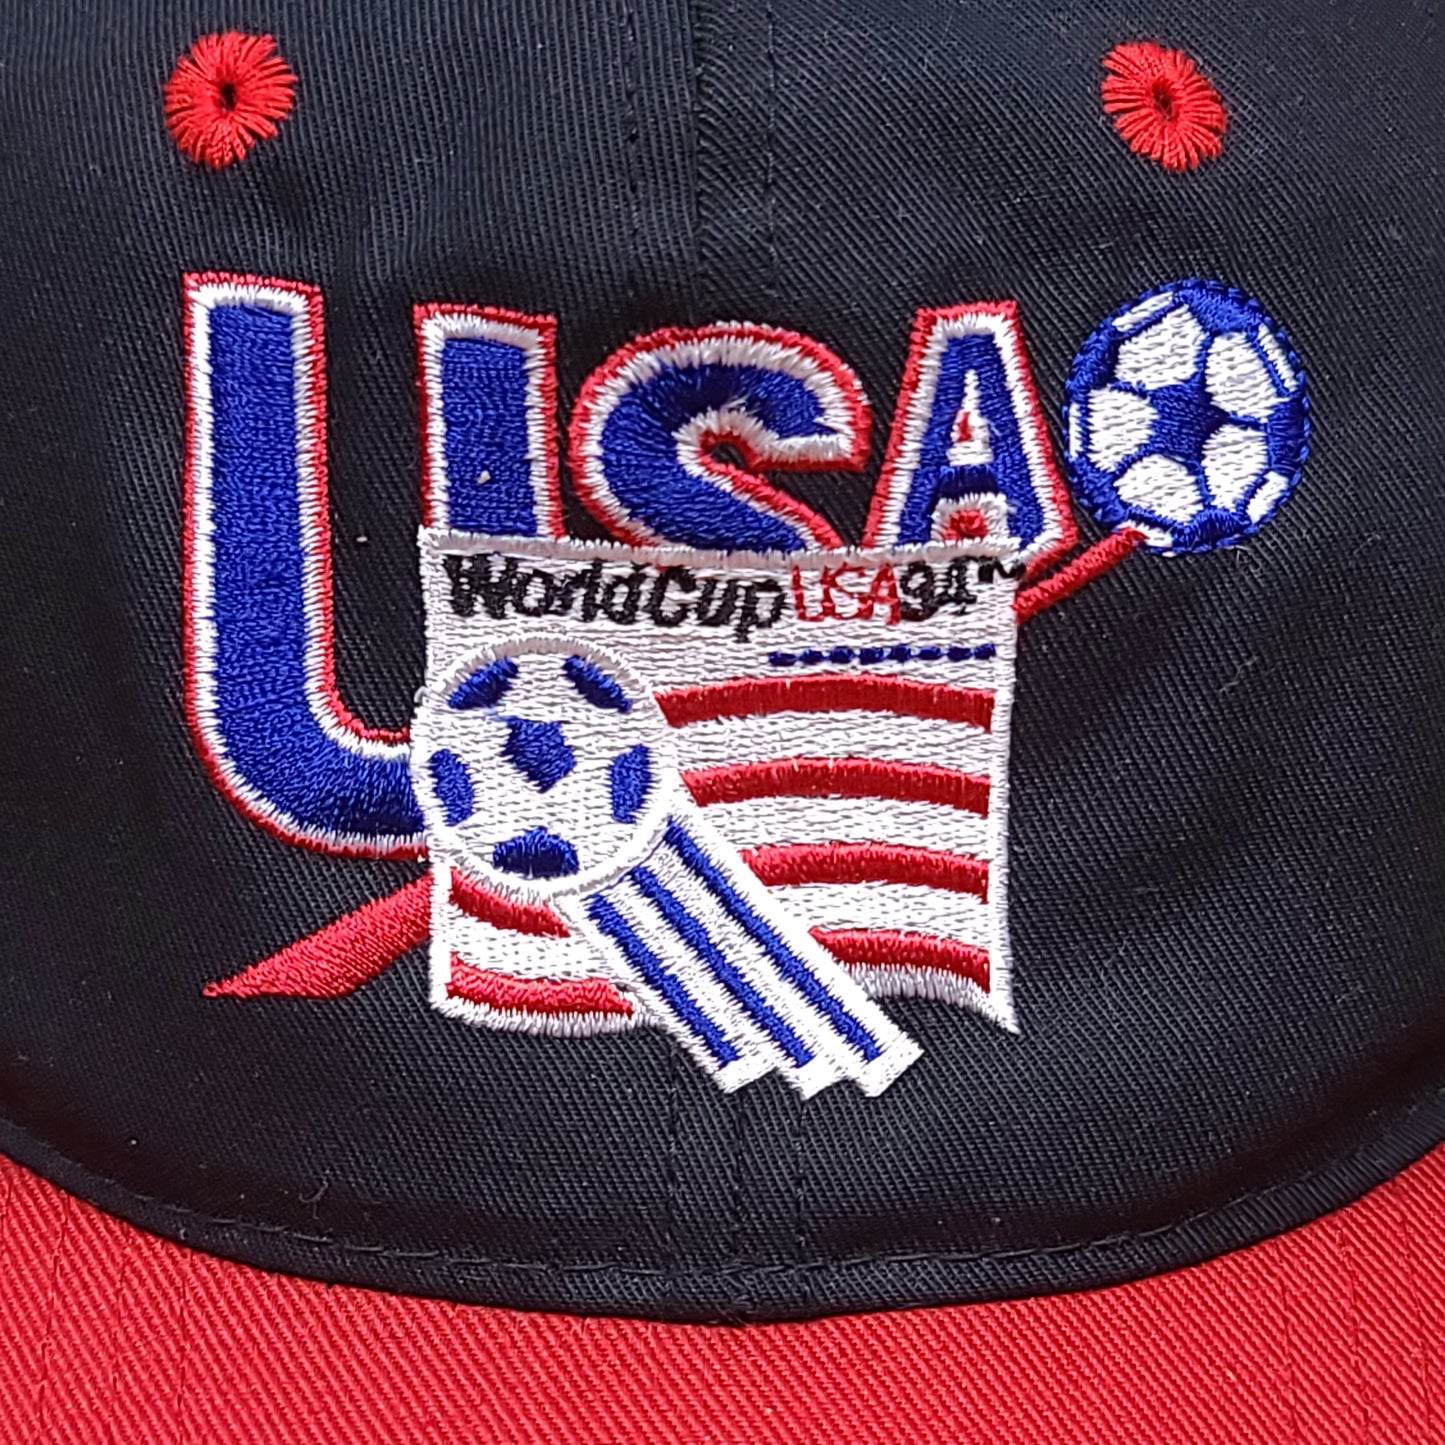 Vintage Team USA World Cup 1994 Snap Back Hat